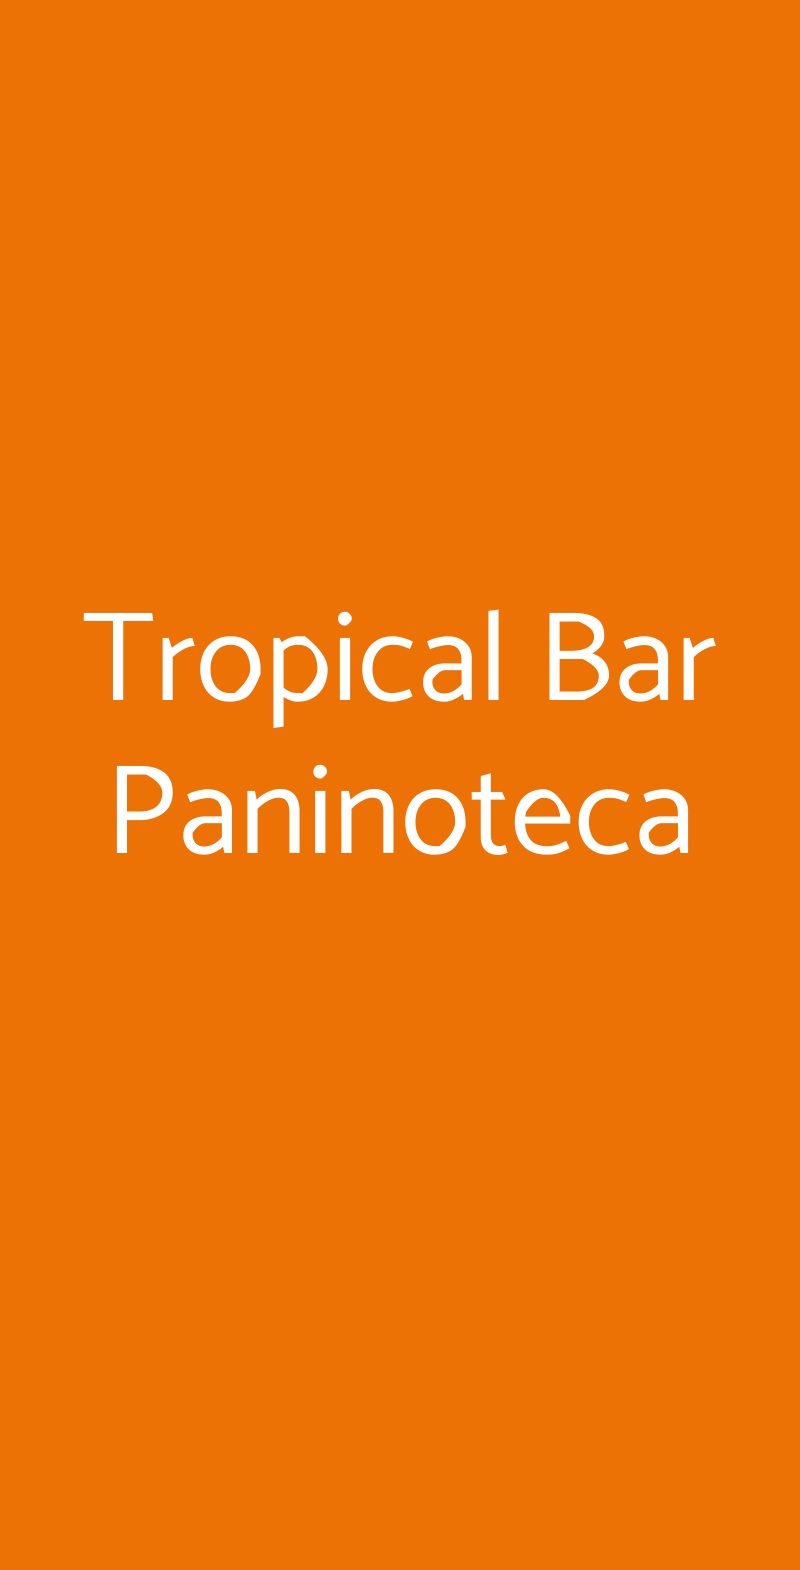 Tropical Bar Paninoteca Trieste menù 1 pagina